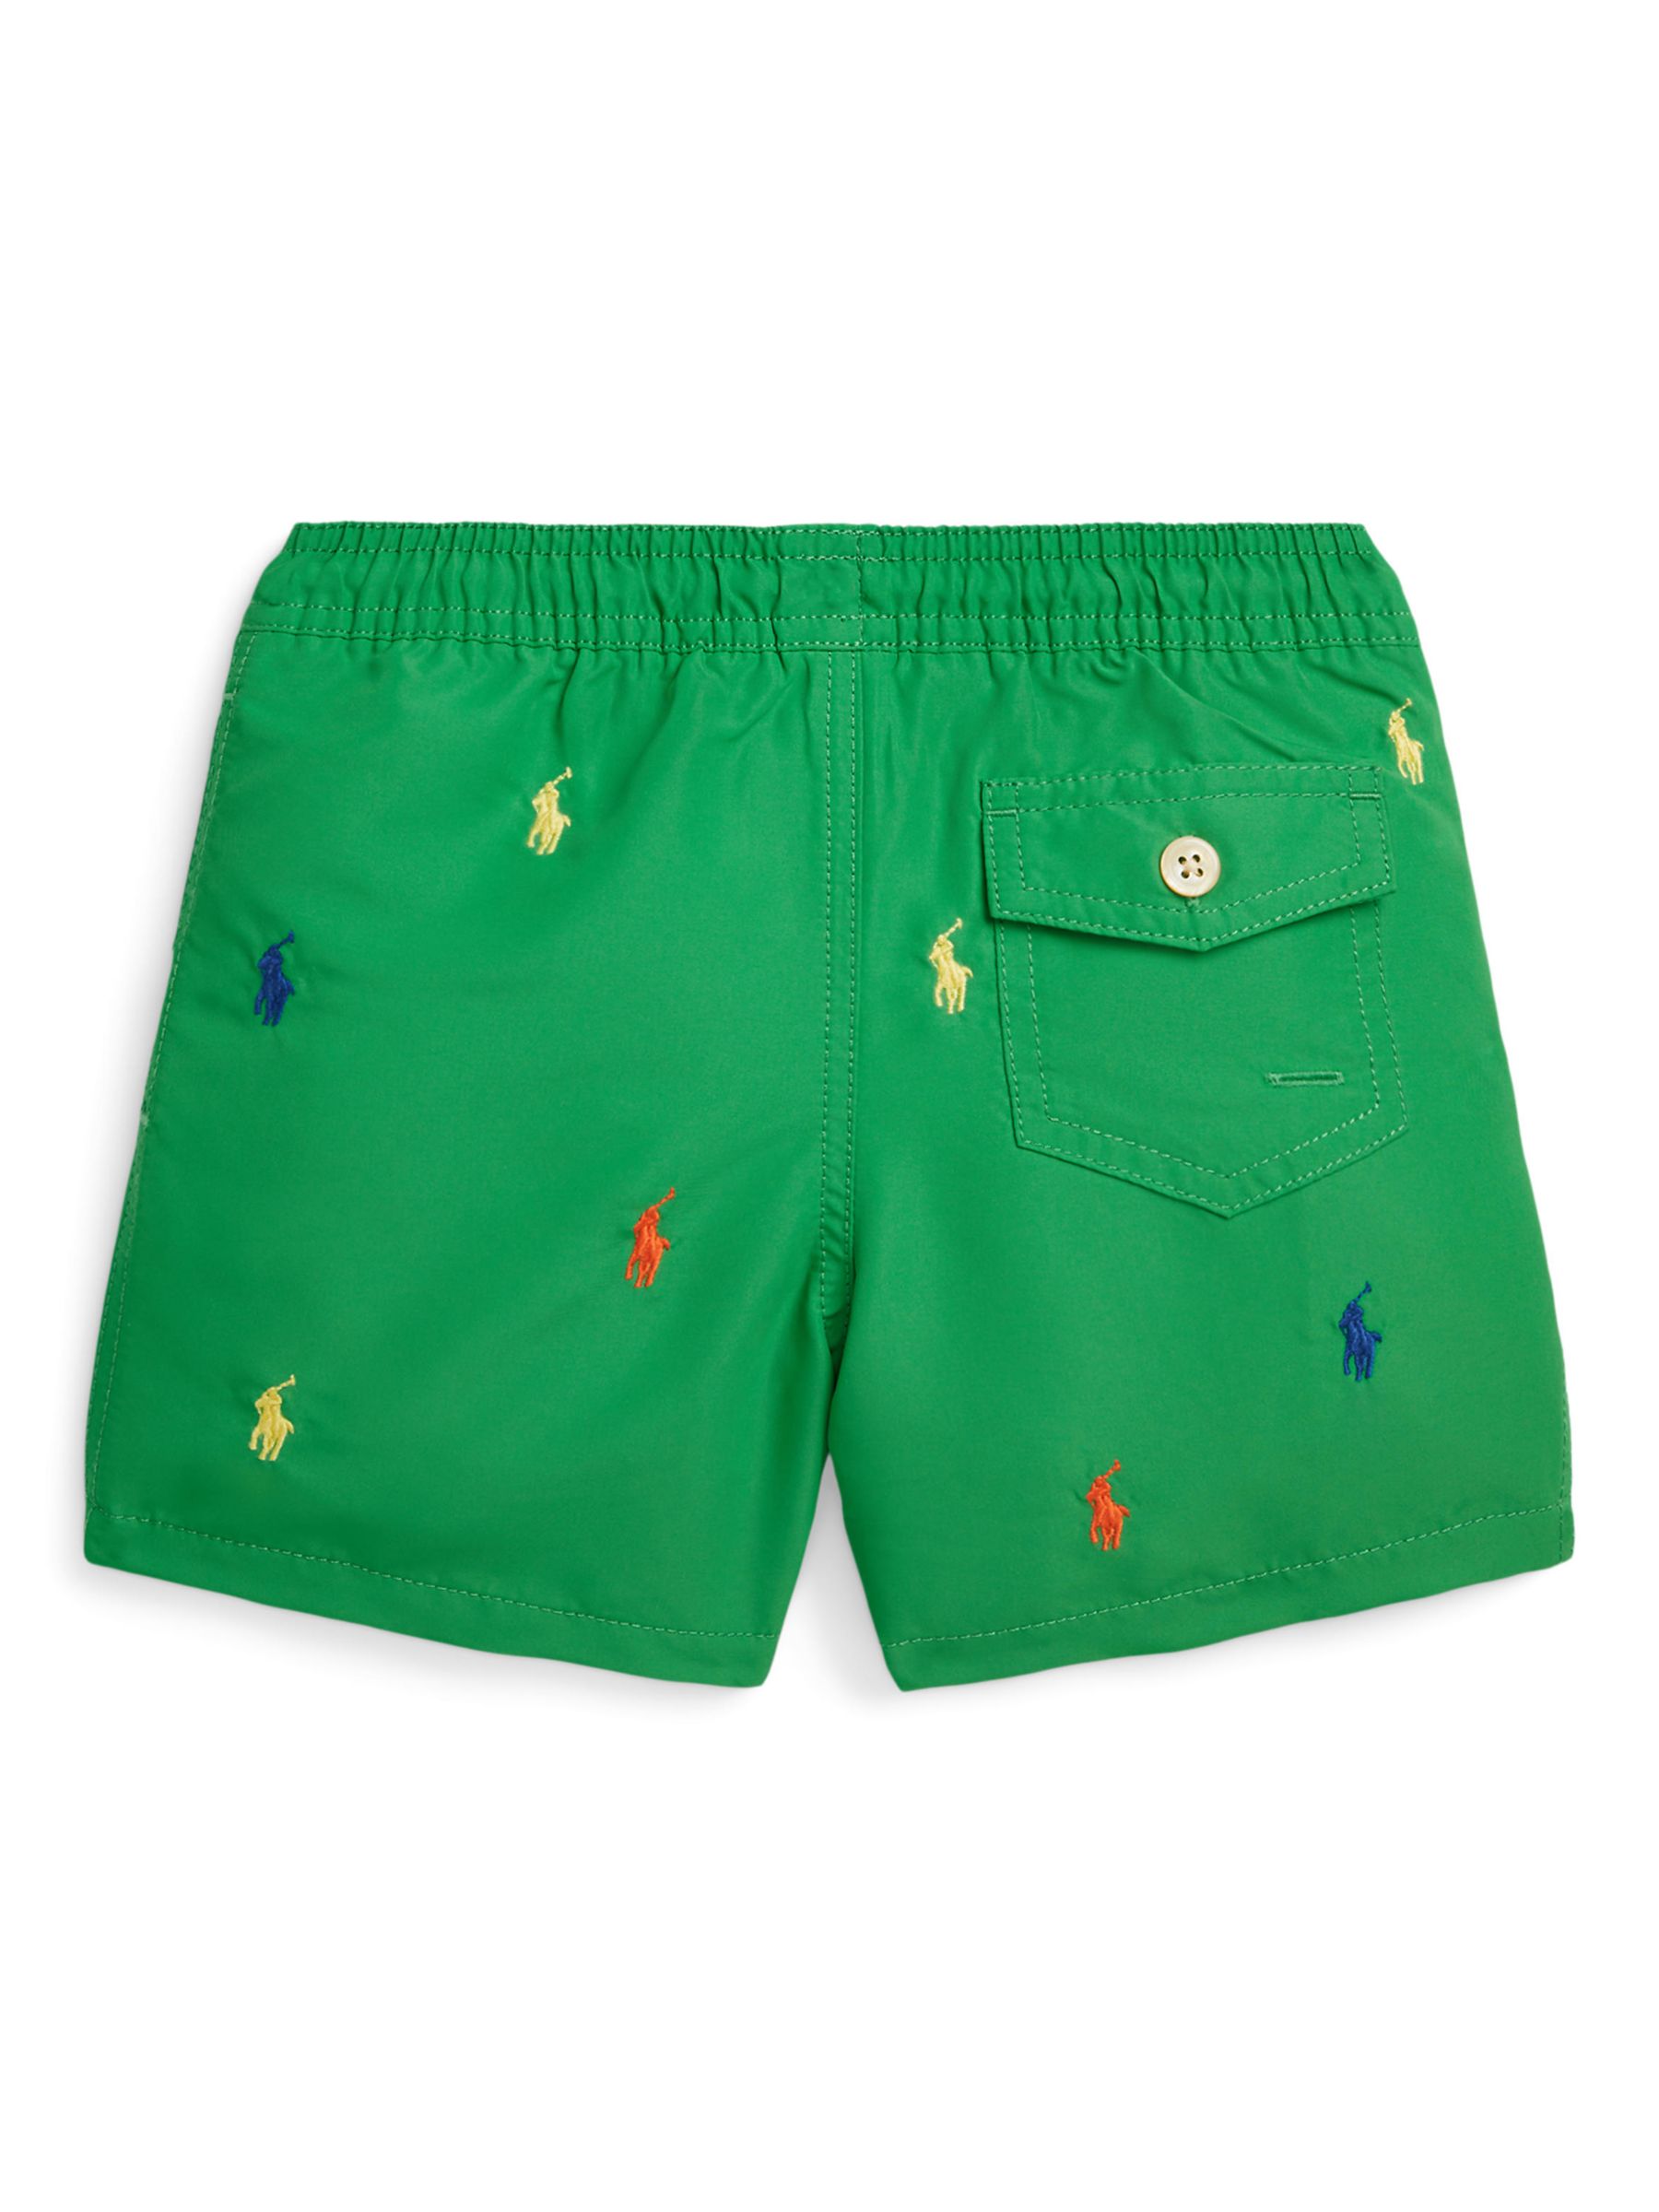 Ralph Lauren Kids' Traveler Signature Embroided Logo Swim Trunks, Preppy Green, 2 years